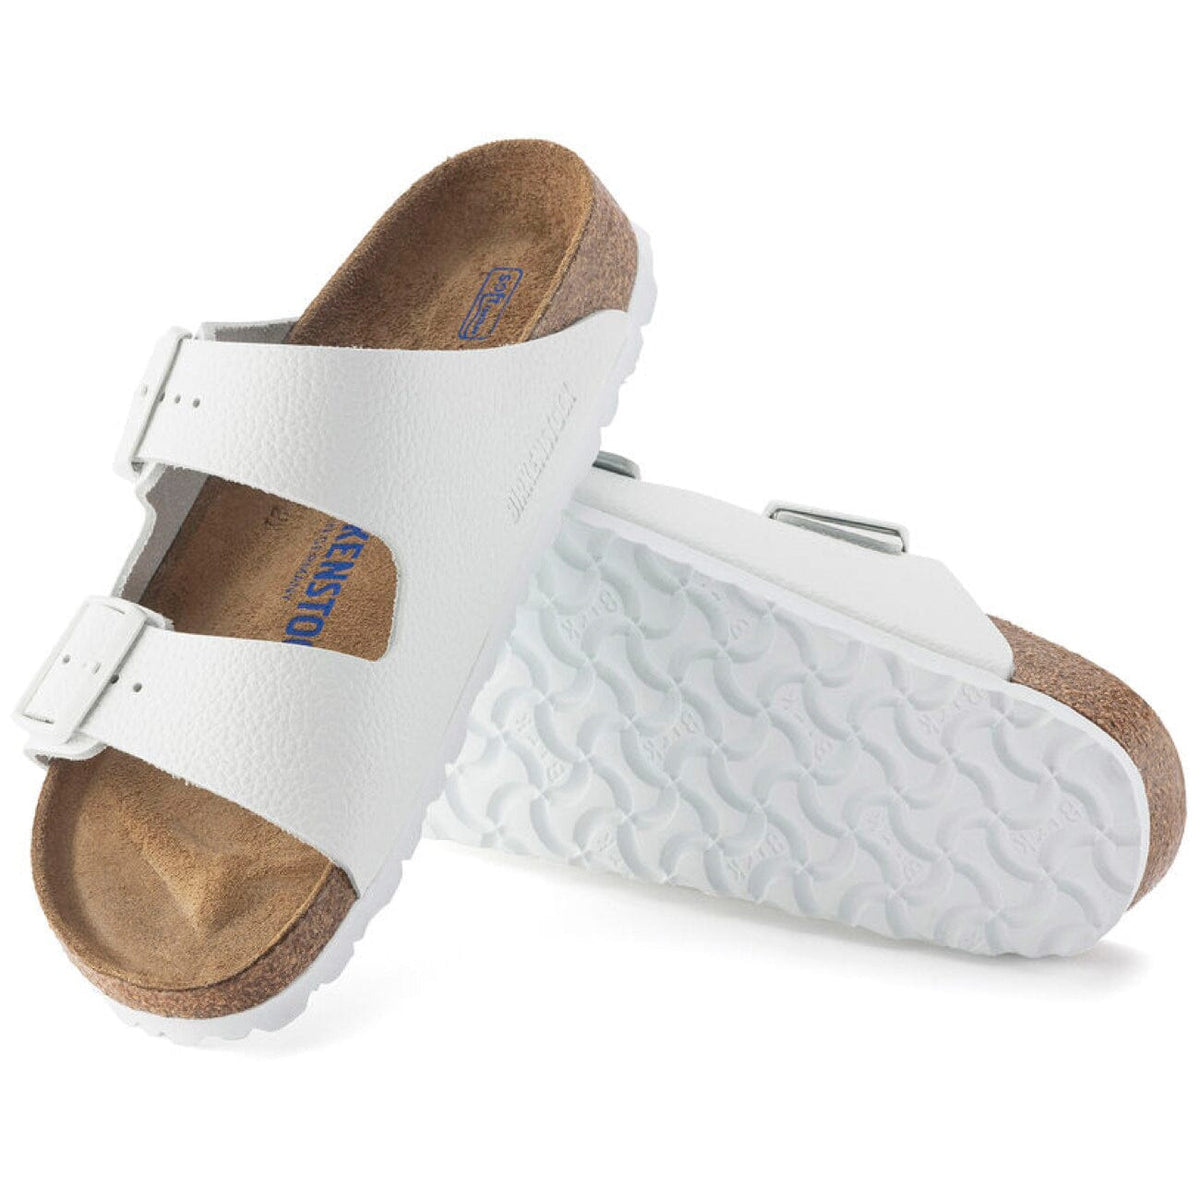 Birkenstock Arizona SFB, White Smooth Leather, Regular Fit Sandals Birkenstock Premium 